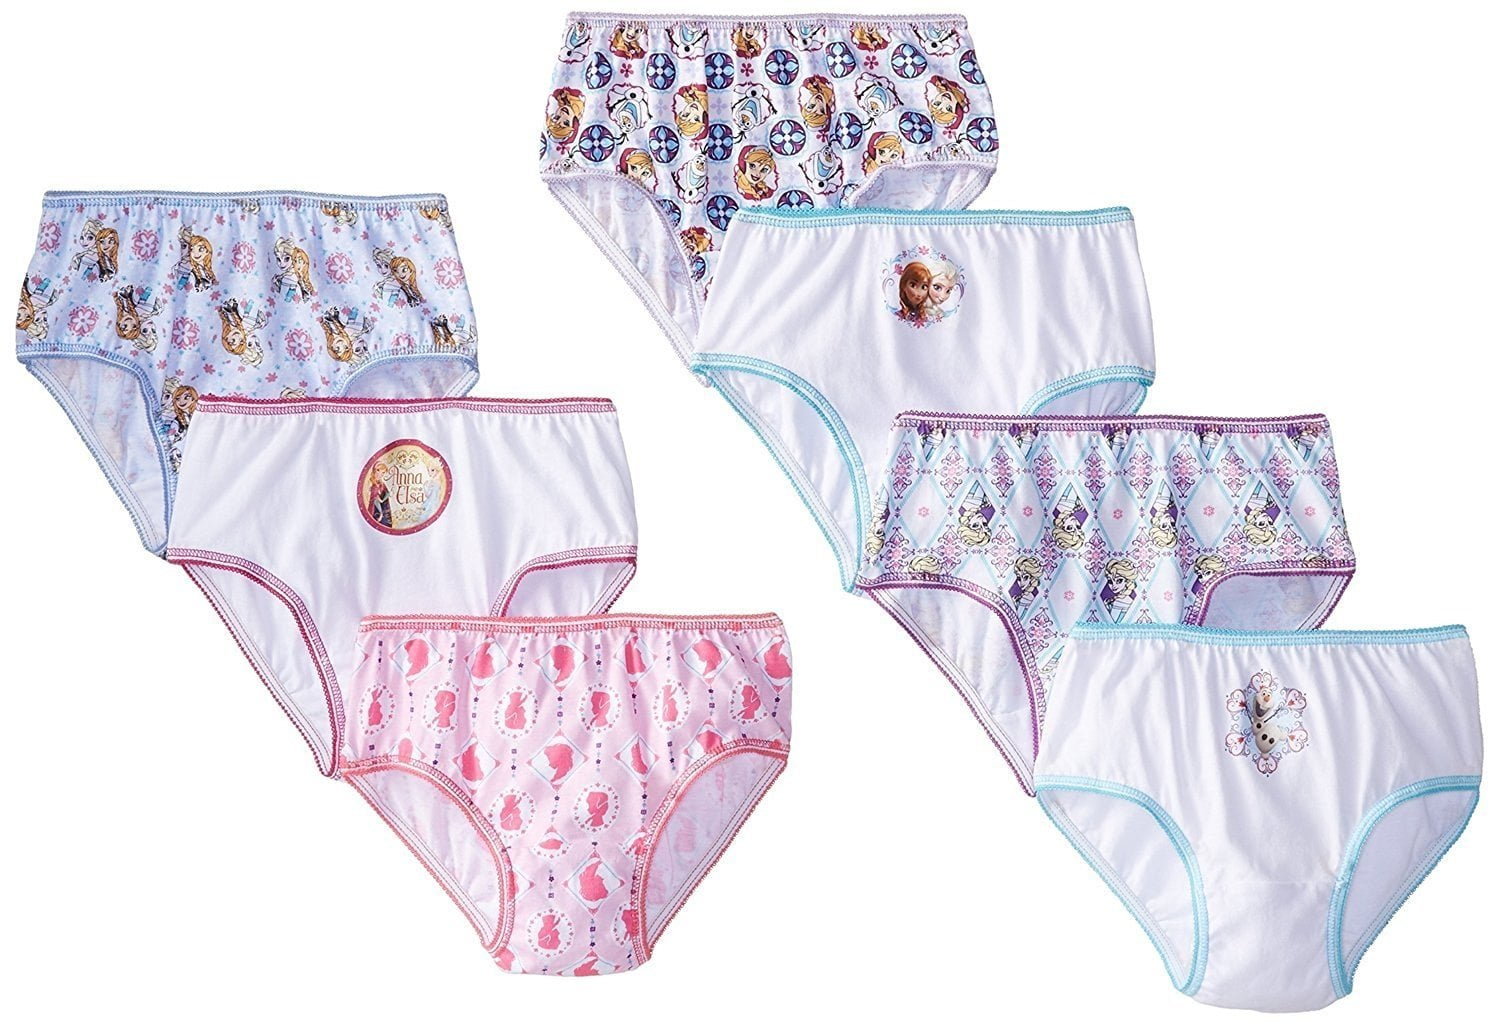 Disney Little Girls' Frozen Panties 7 Pack, Elsa, Anna Underwear 